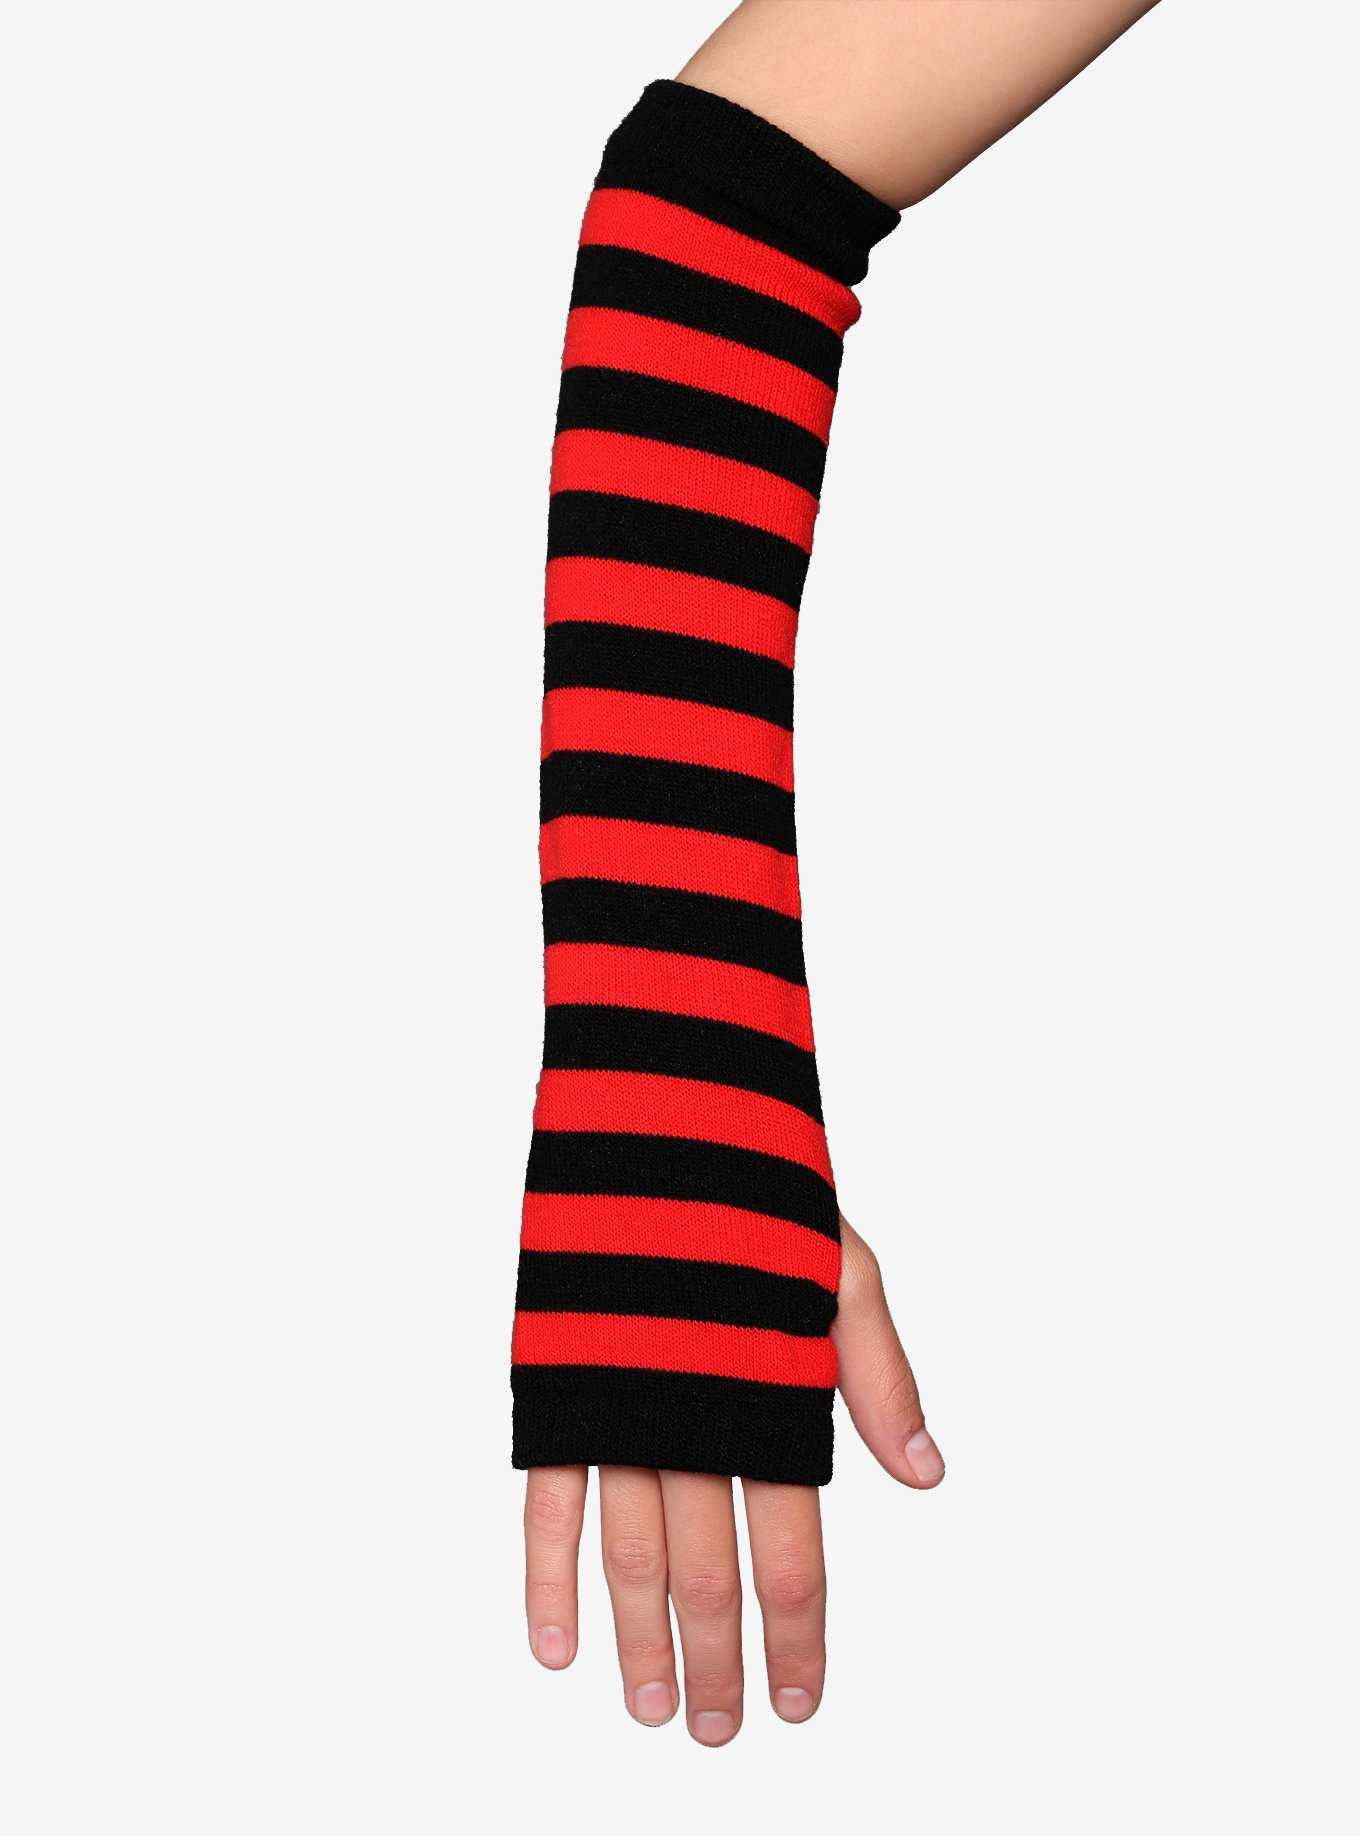 Red & Black Stripe Arm Warmers, , hi-res